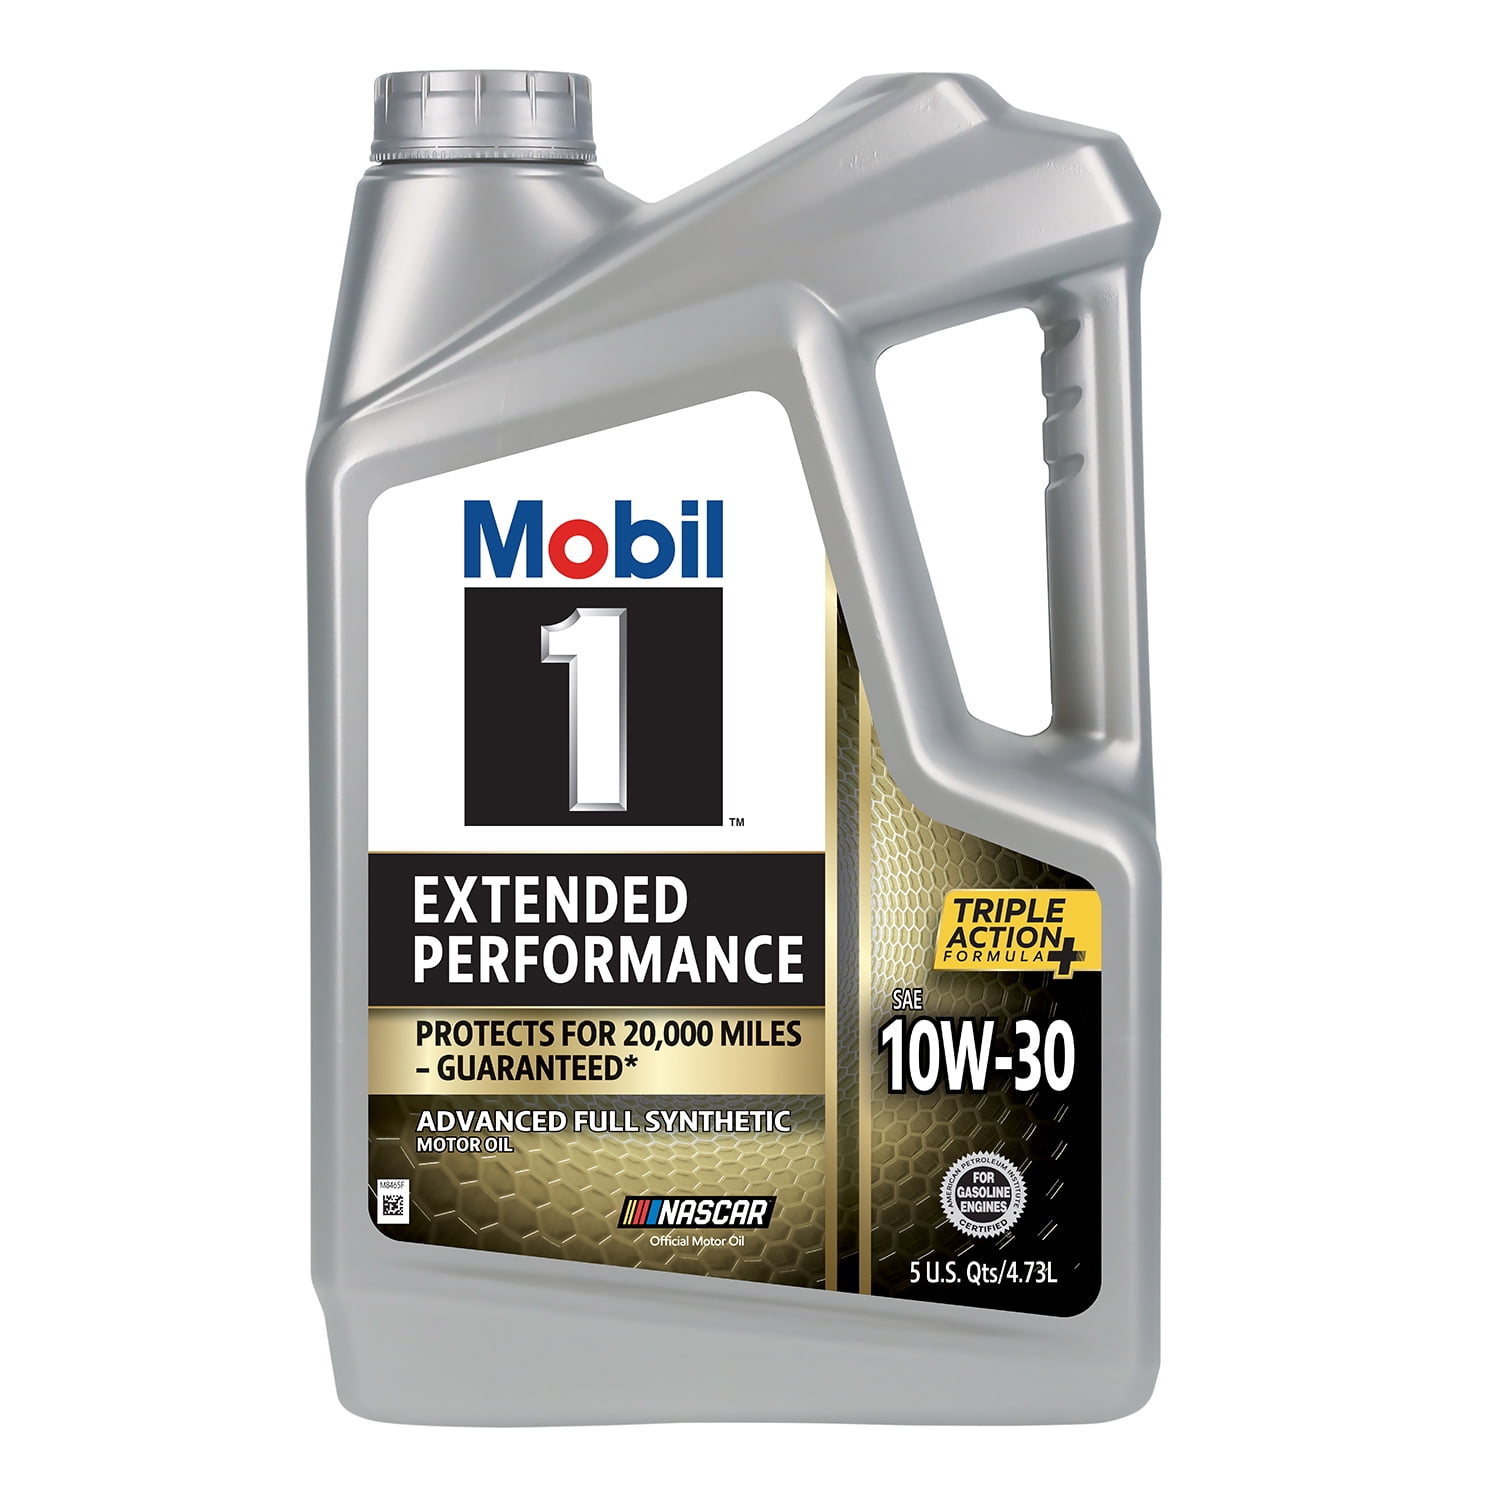 Mobil 1 Extended Performance Full Synthetic Motor Oil 10W-30, 5 qt (3 Pack) - 2